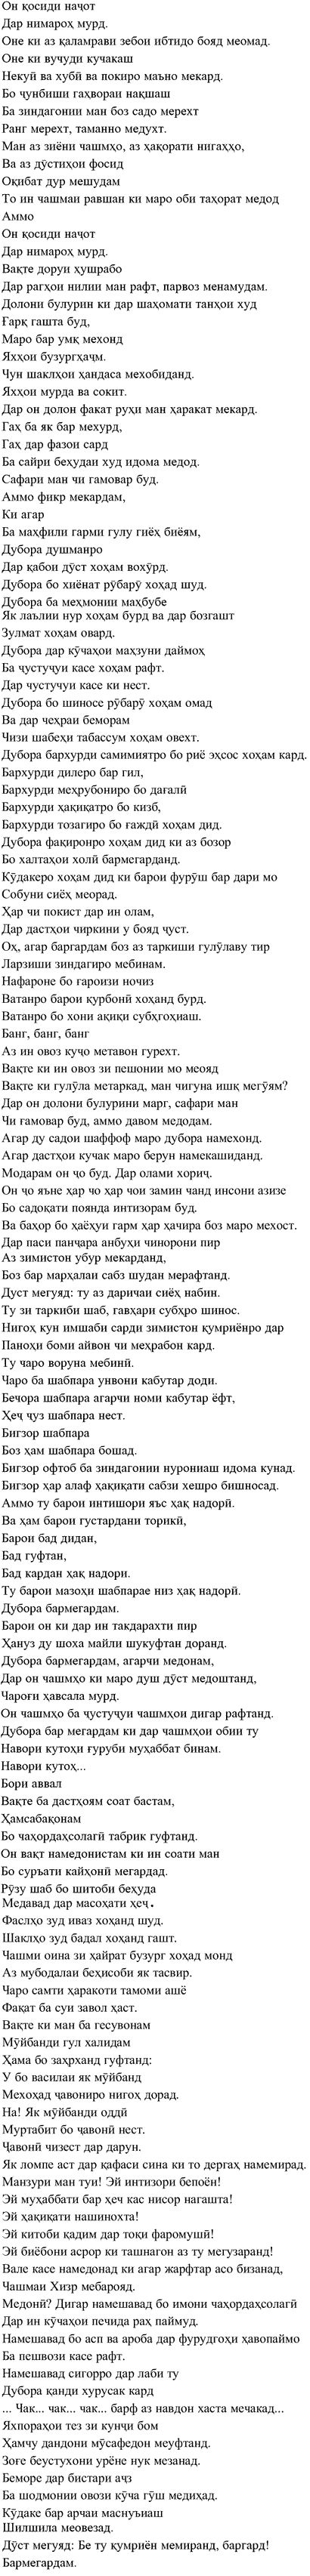 Image of original poem's text